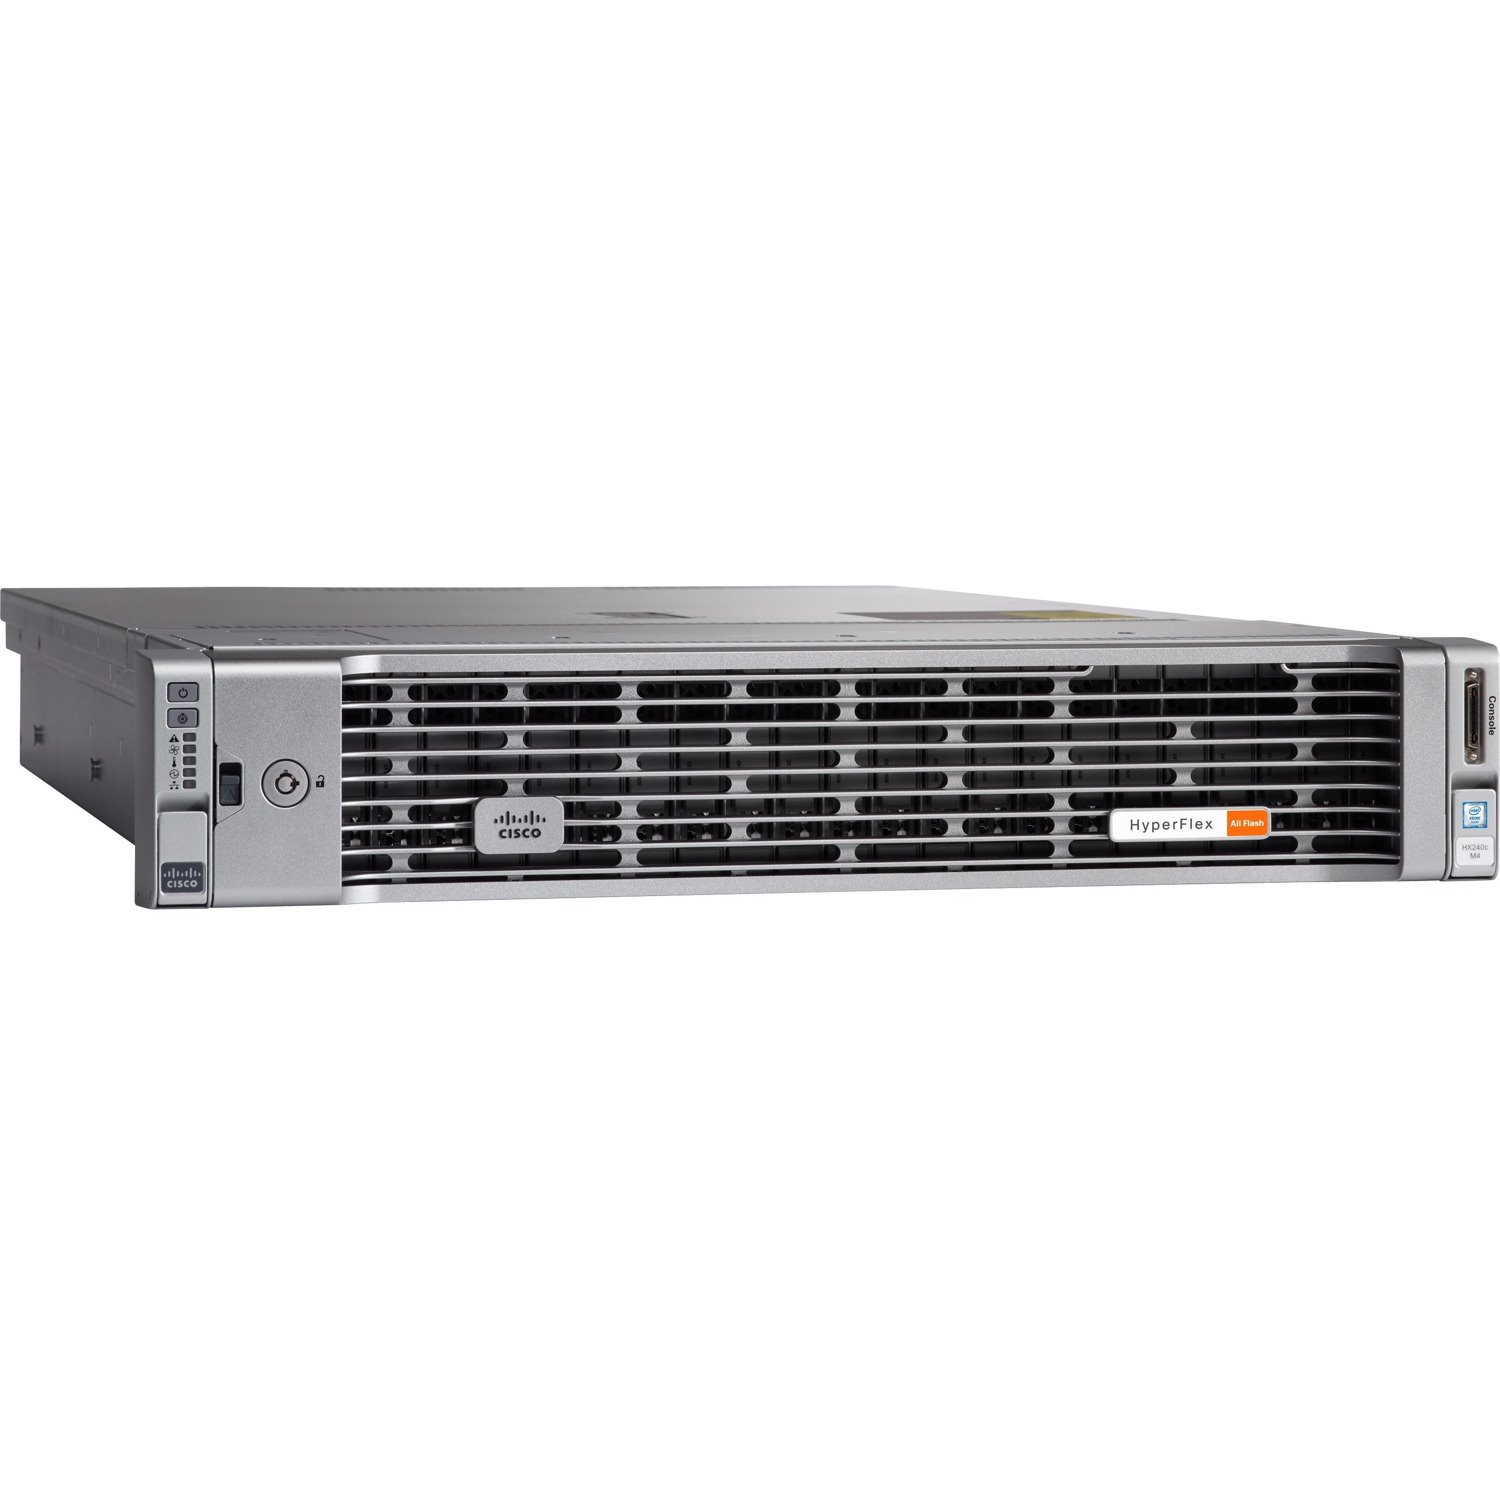 Cisco HyperFlex HX240c M4 2U Rack Server - 2 x Intel Xeon E5-2630 v4 2.20 GHz - 256 GB RAM - 12Gb/s SAS Controller